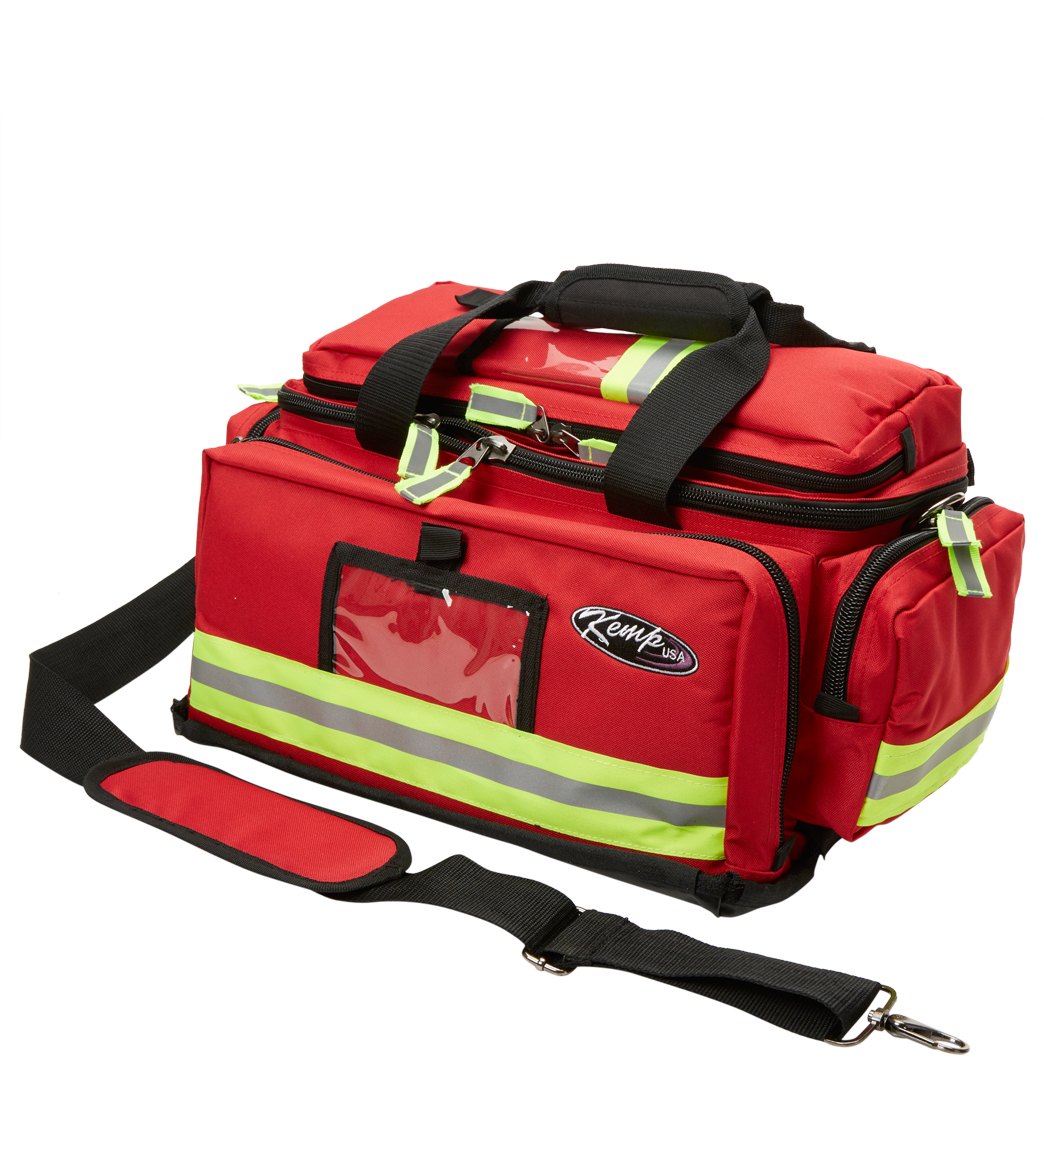 KEMP Professional Trauma Lifeguard Bag at SwimOutlet.com - Free Shipping